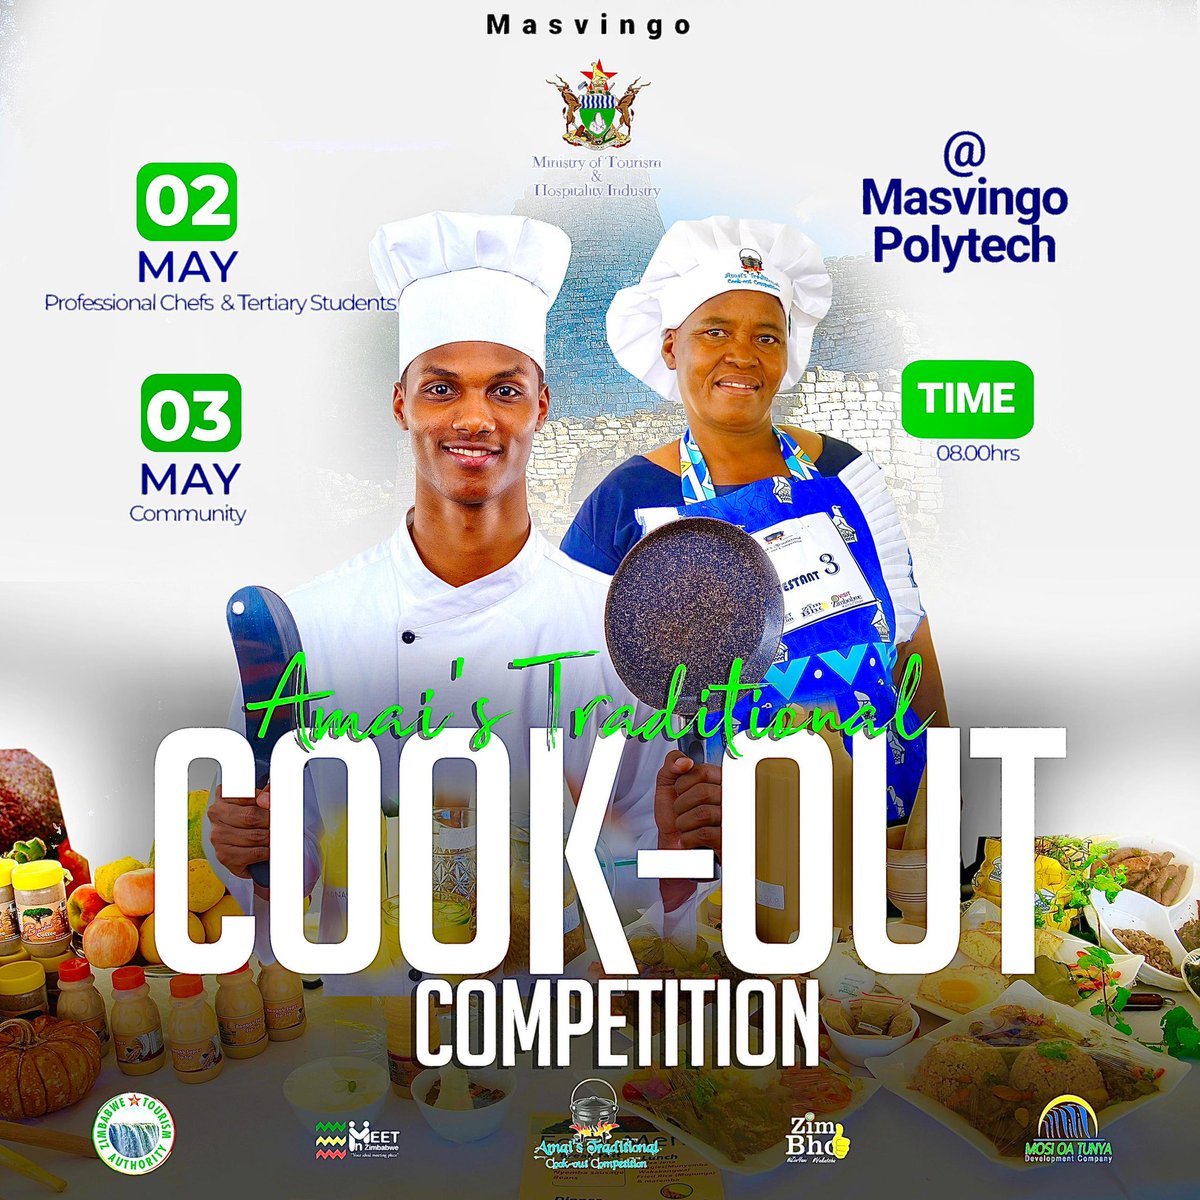 Join us tomorrow 02 May and Friday 03 May in Masvingo at Masvingo Polytechnic for the Amais Cookout Provincial Competitions.

#ZimGatronomy
#VisitZimbabwe
#ZimBho
#ZimCuisine